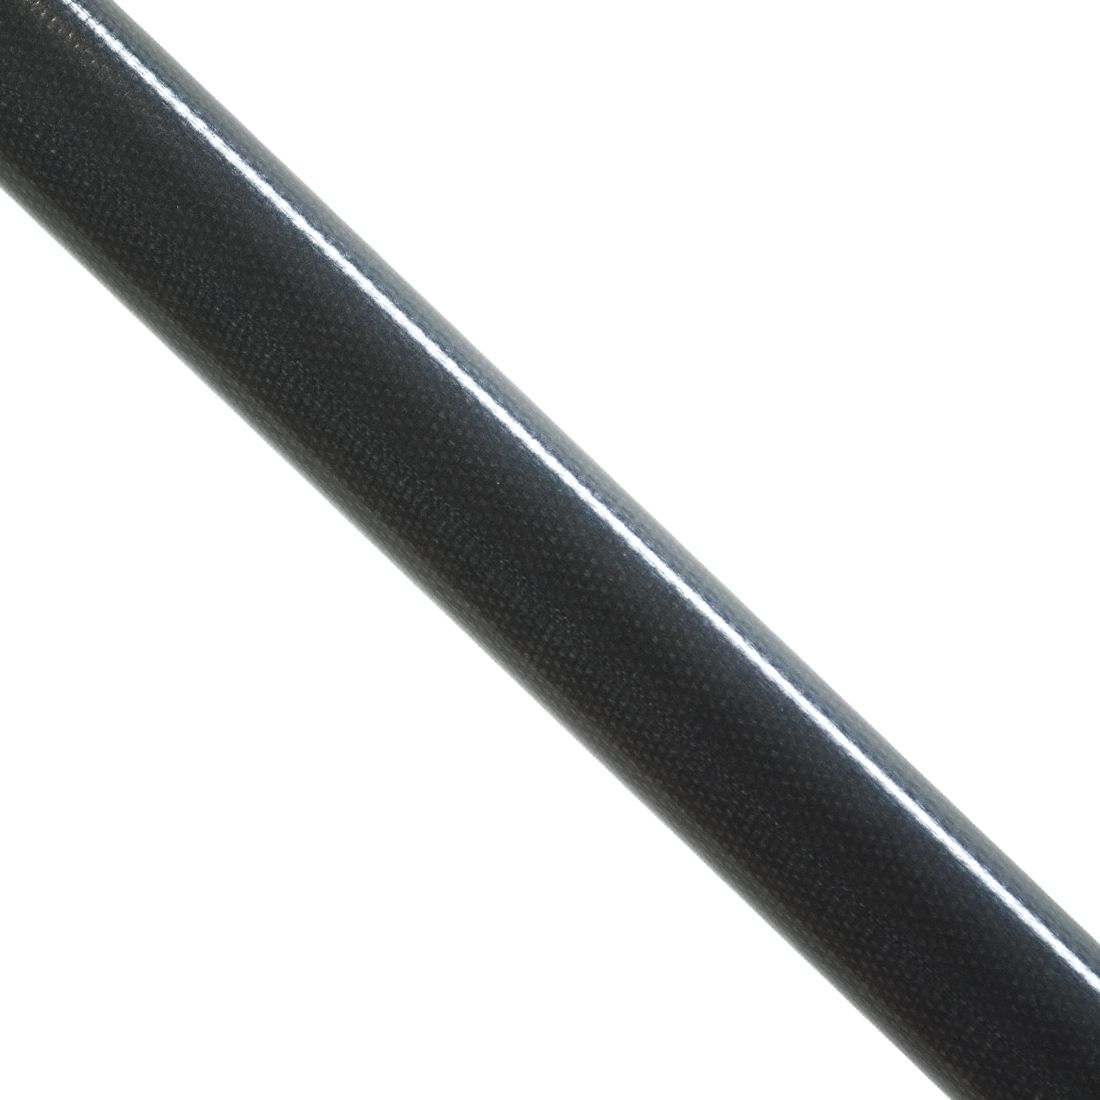 Unger nLite Hybrid Extension Pole - 11 Foot - Carbon Fiber Detailed Close-Up View